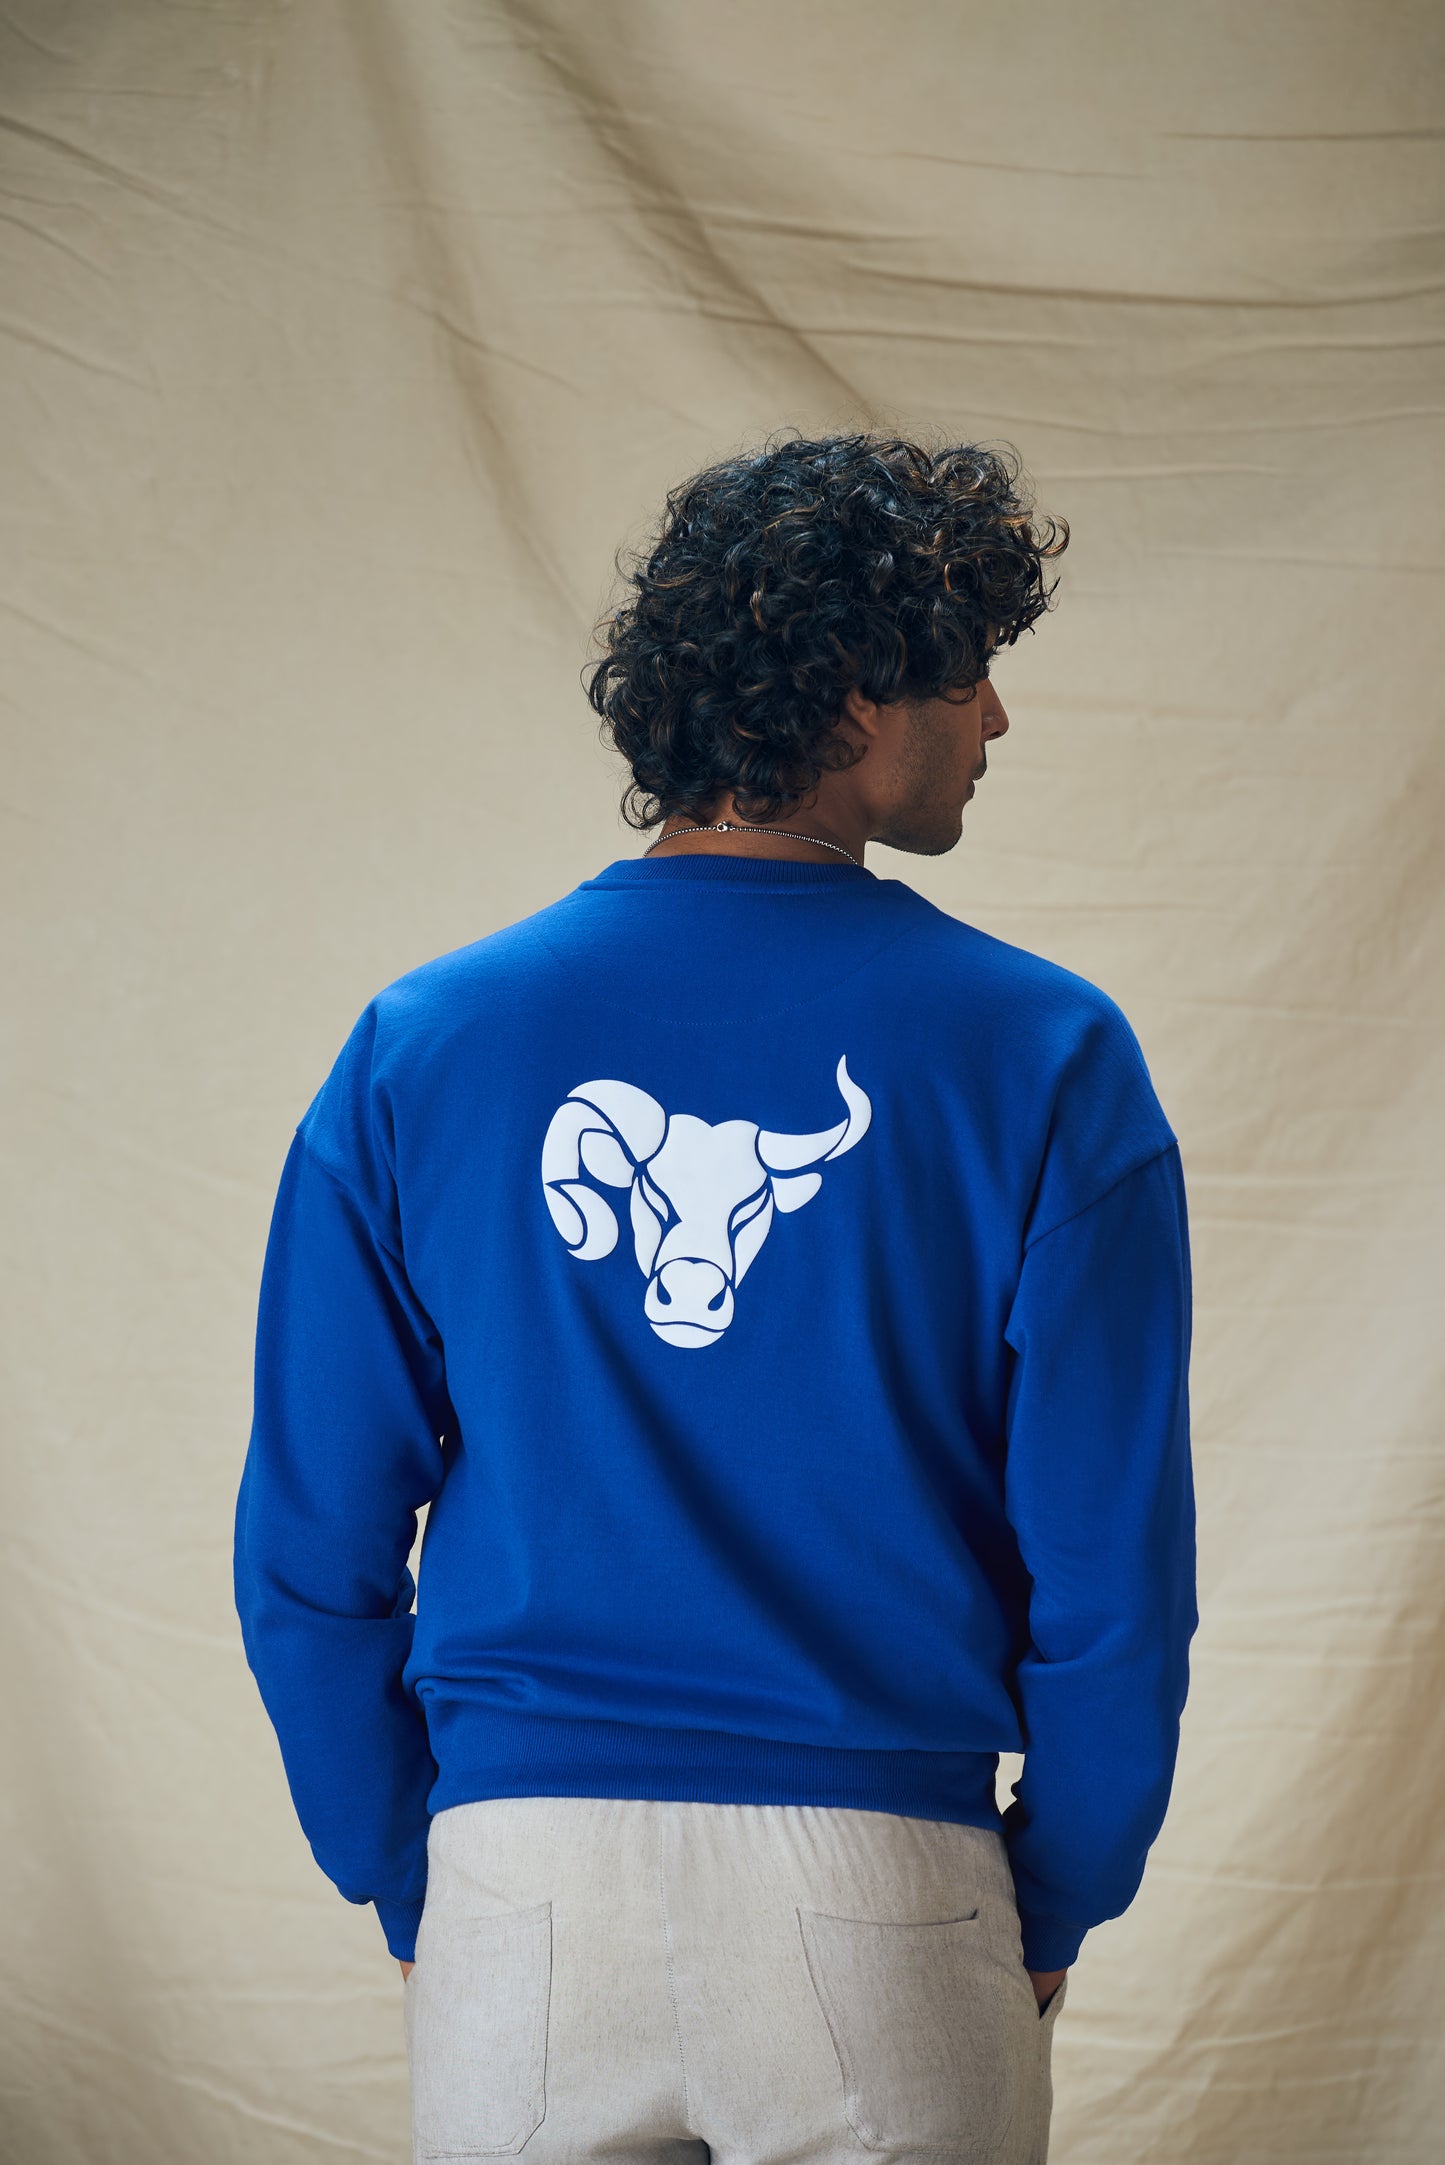 Solid royal blue unisex sweatshirt